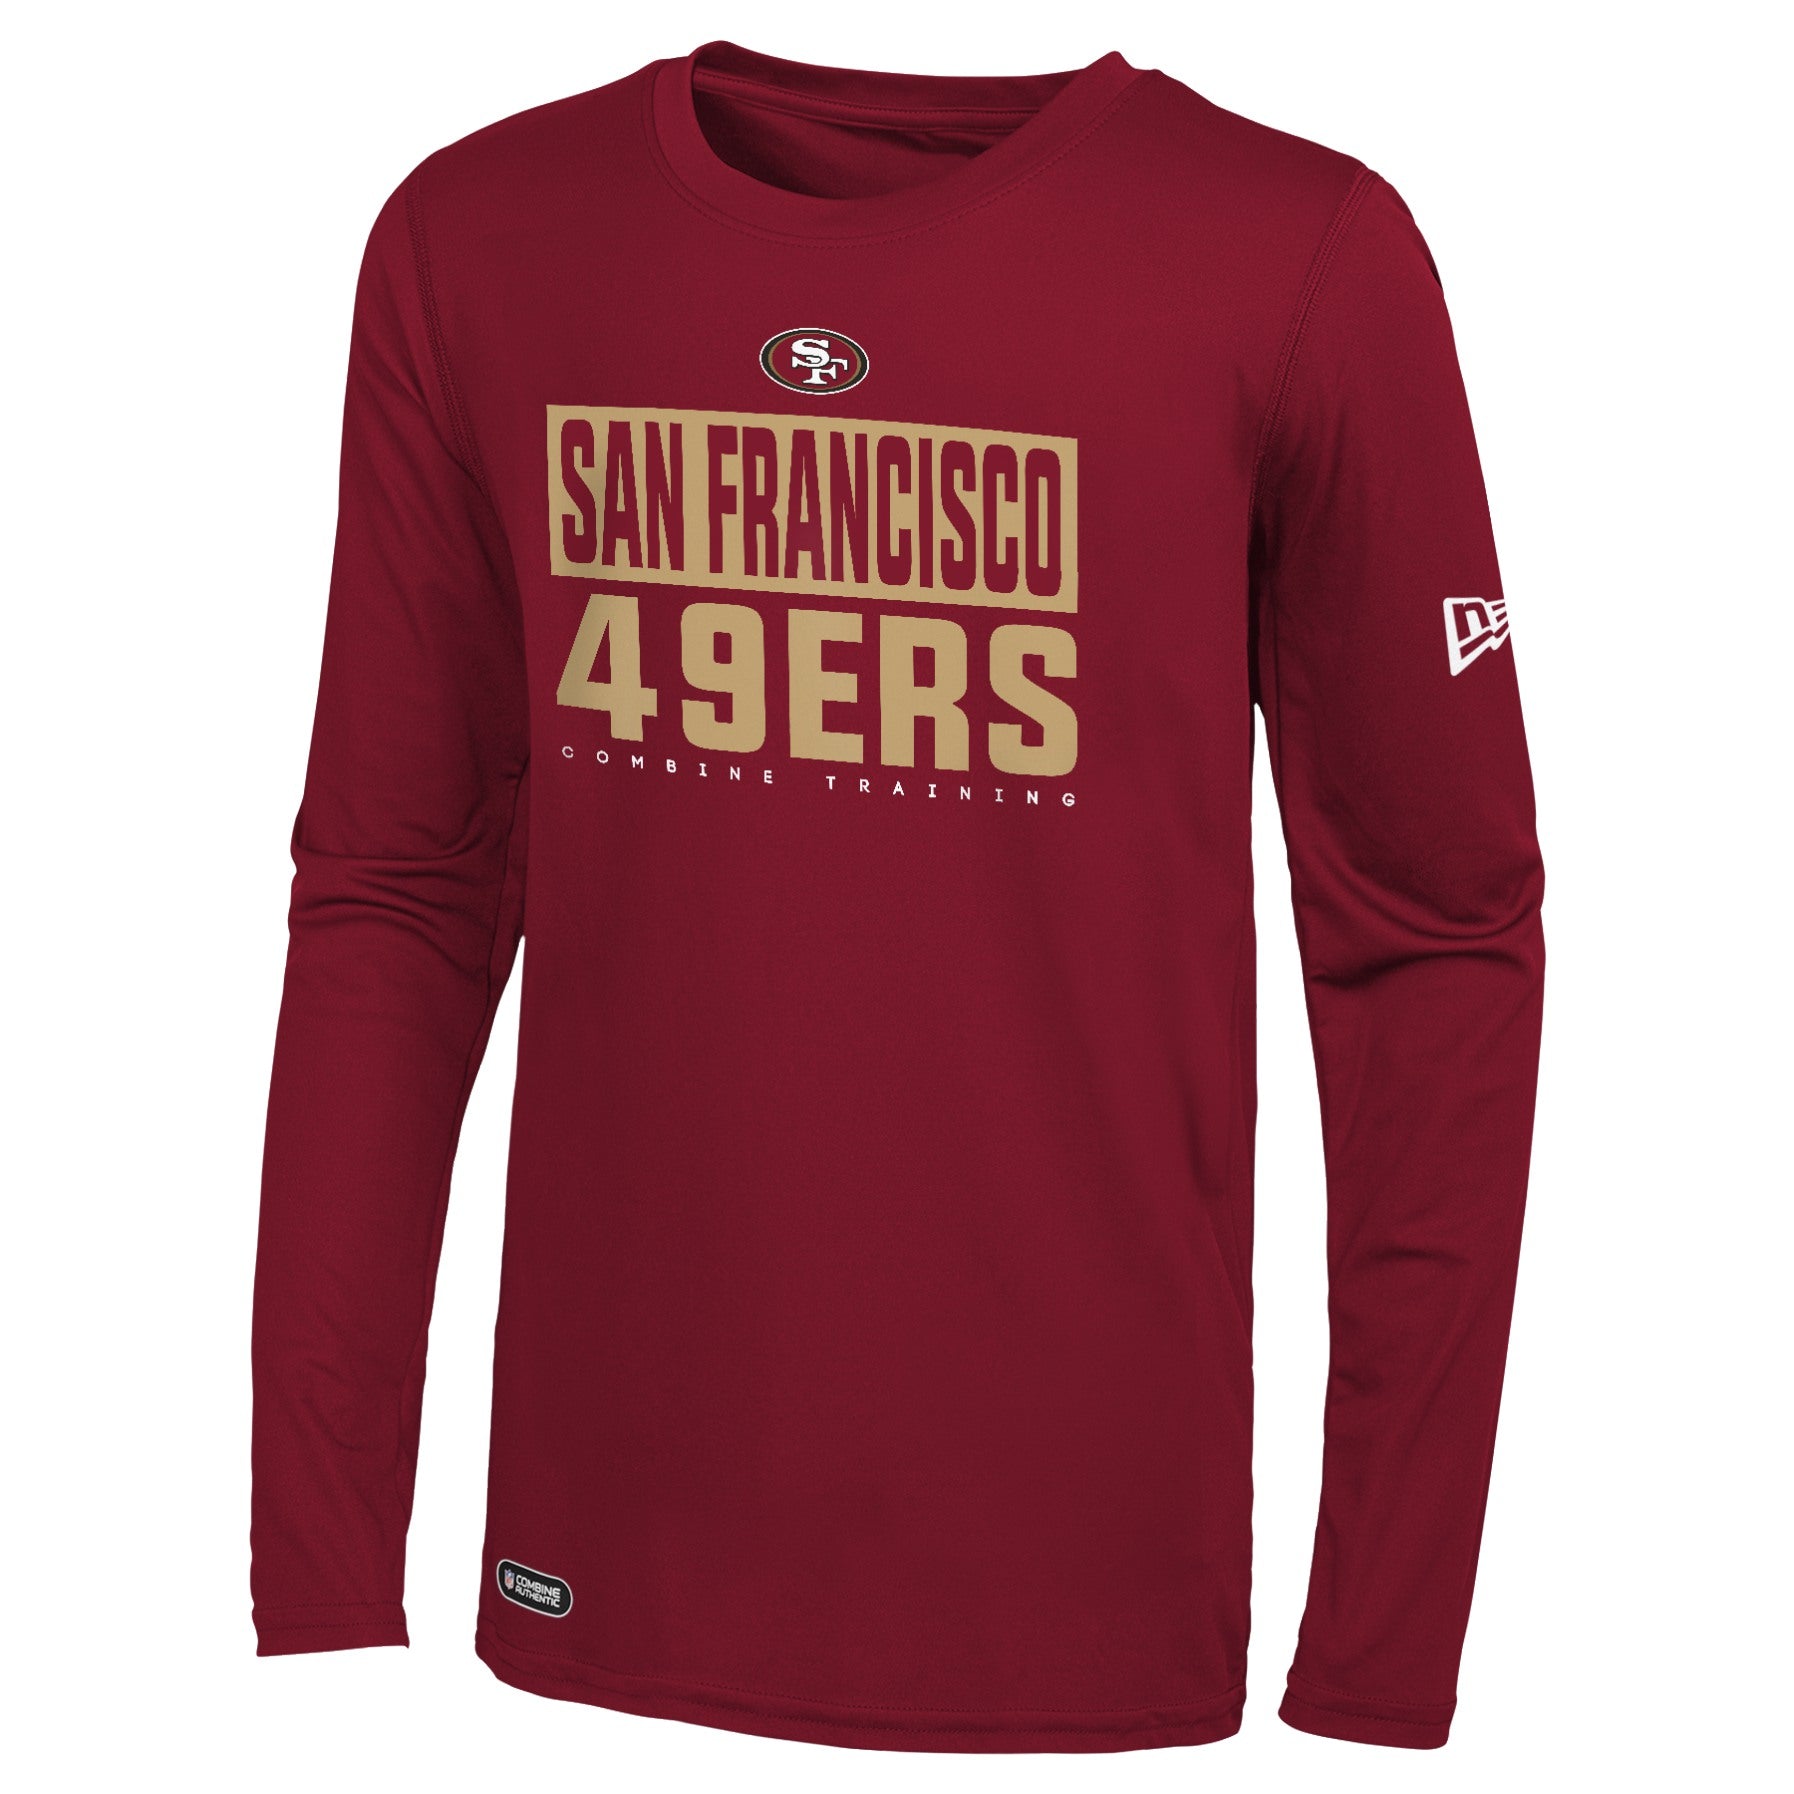 Men's San Francisco jersey